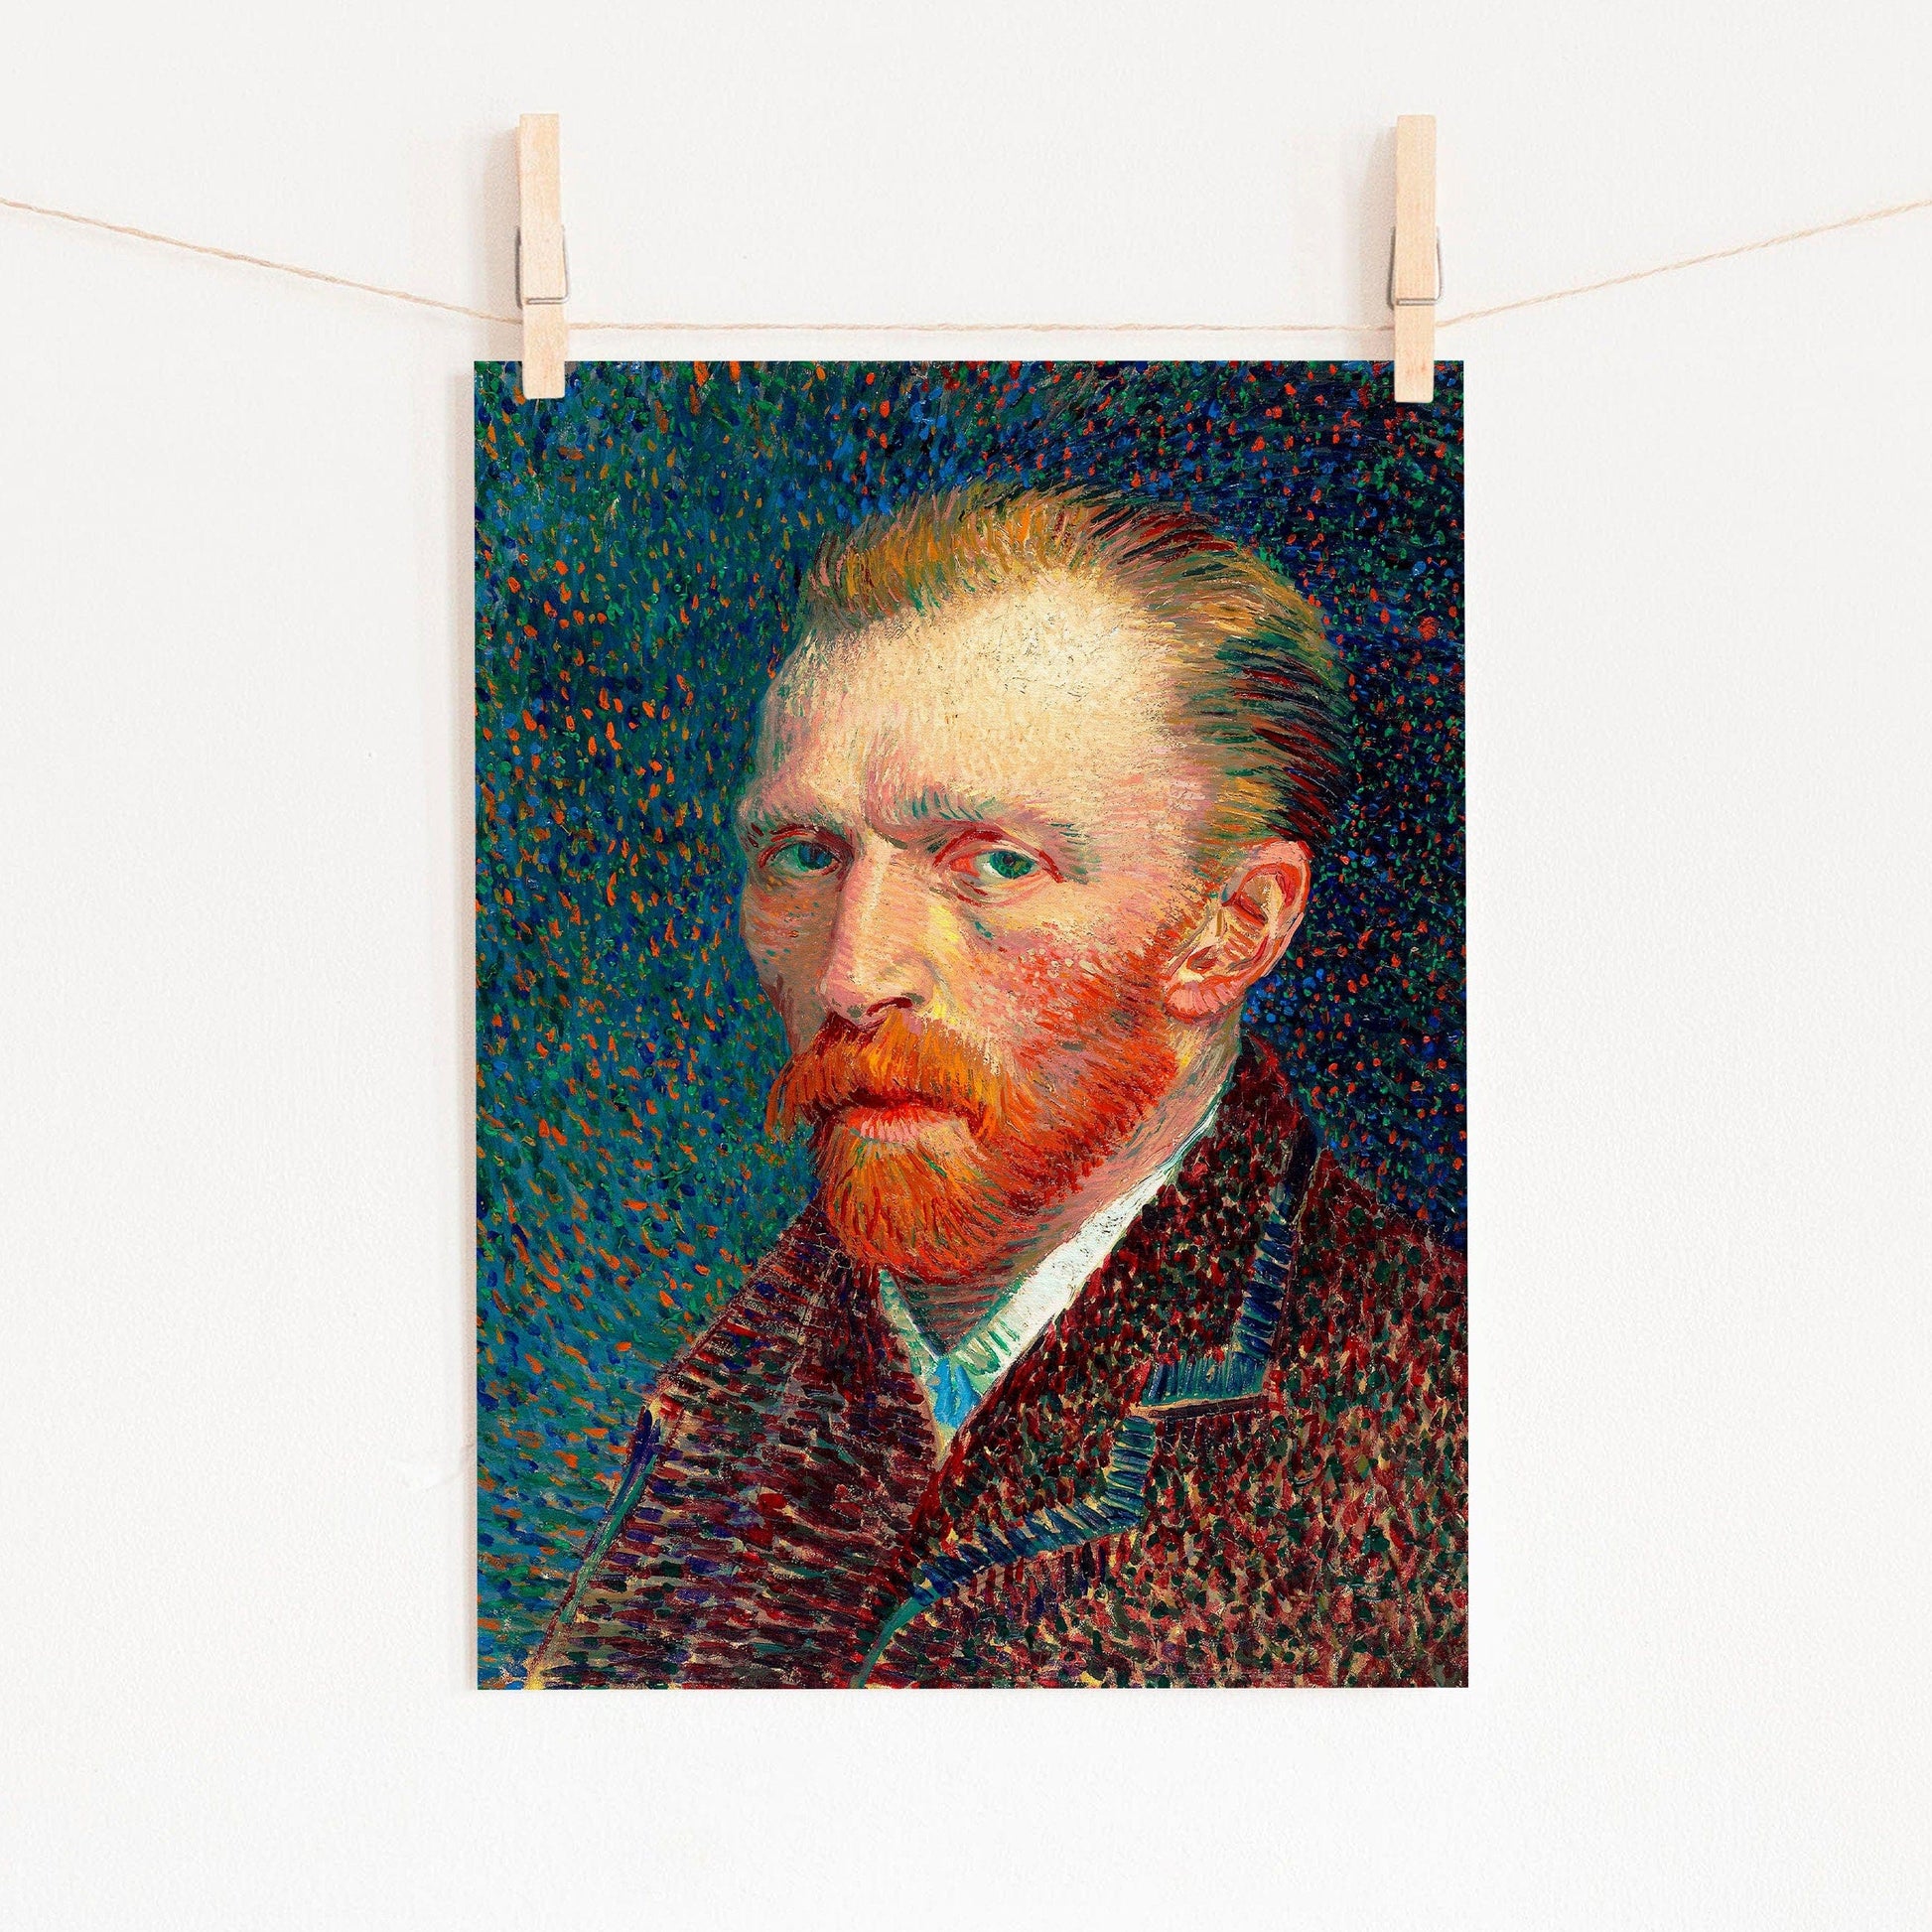 Home Poster Decor Van Gogh Poster, Van Gogh Portrait, Self-Portrait, Van Gogh Painting, Van Gogh Exhibition, Museum Quality Print, Various sizes